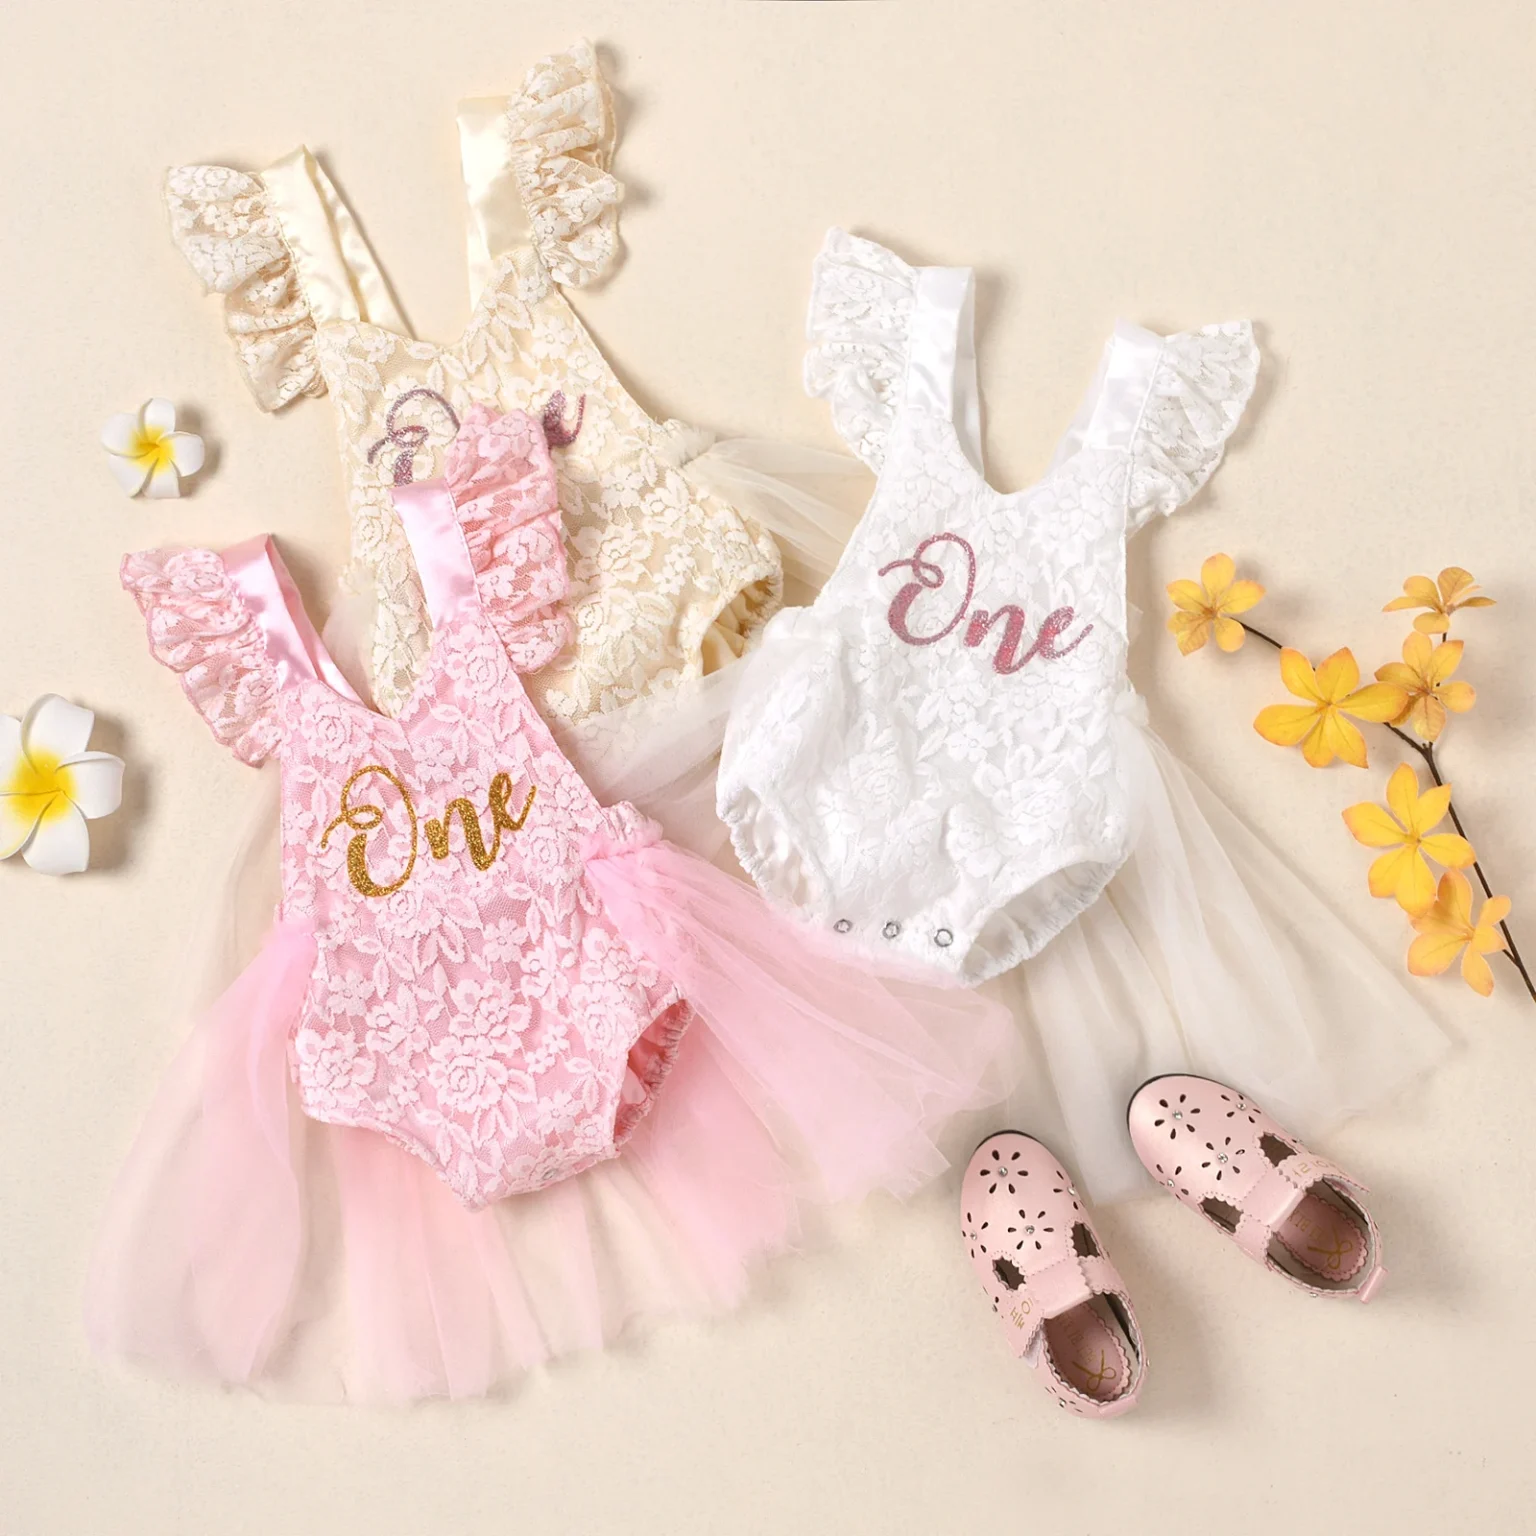 FOCUSNORM-Newborn-Baby-Girls-Romper-Dress-Mesh-Lace-One-Letter-Print-Little-Princess-Party-Dress-Summer